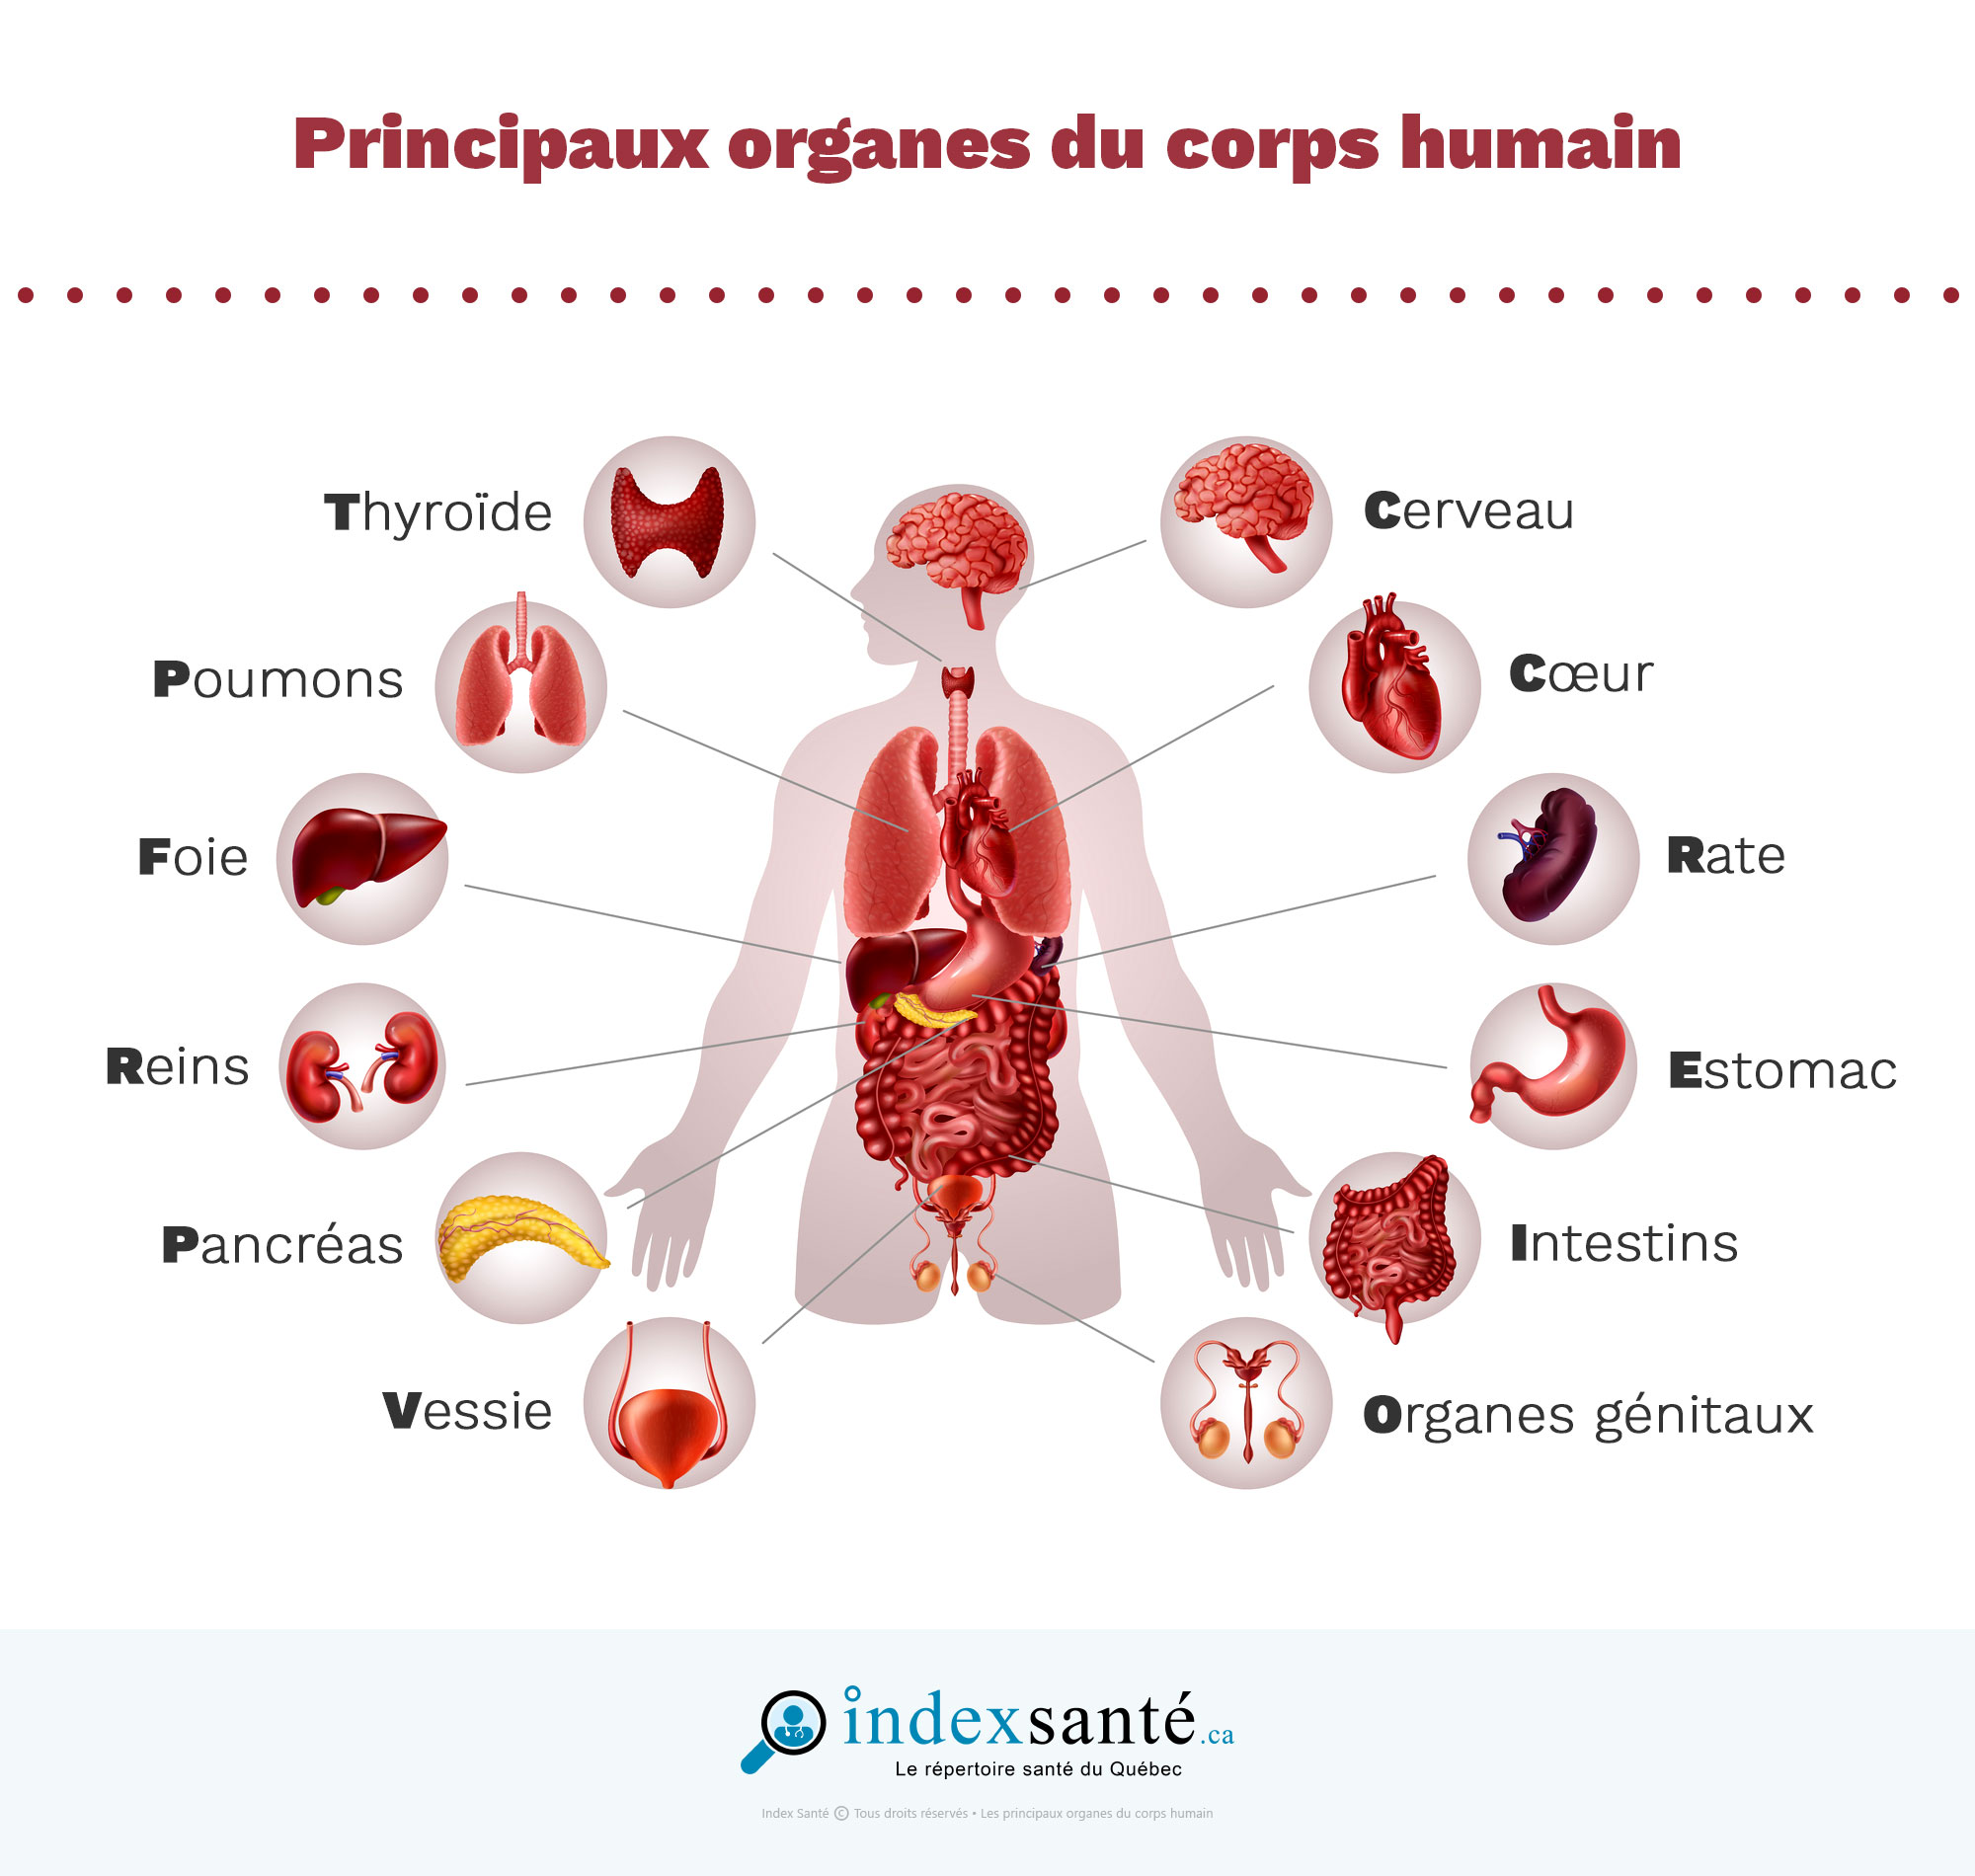 Les principaux organes du corps humain